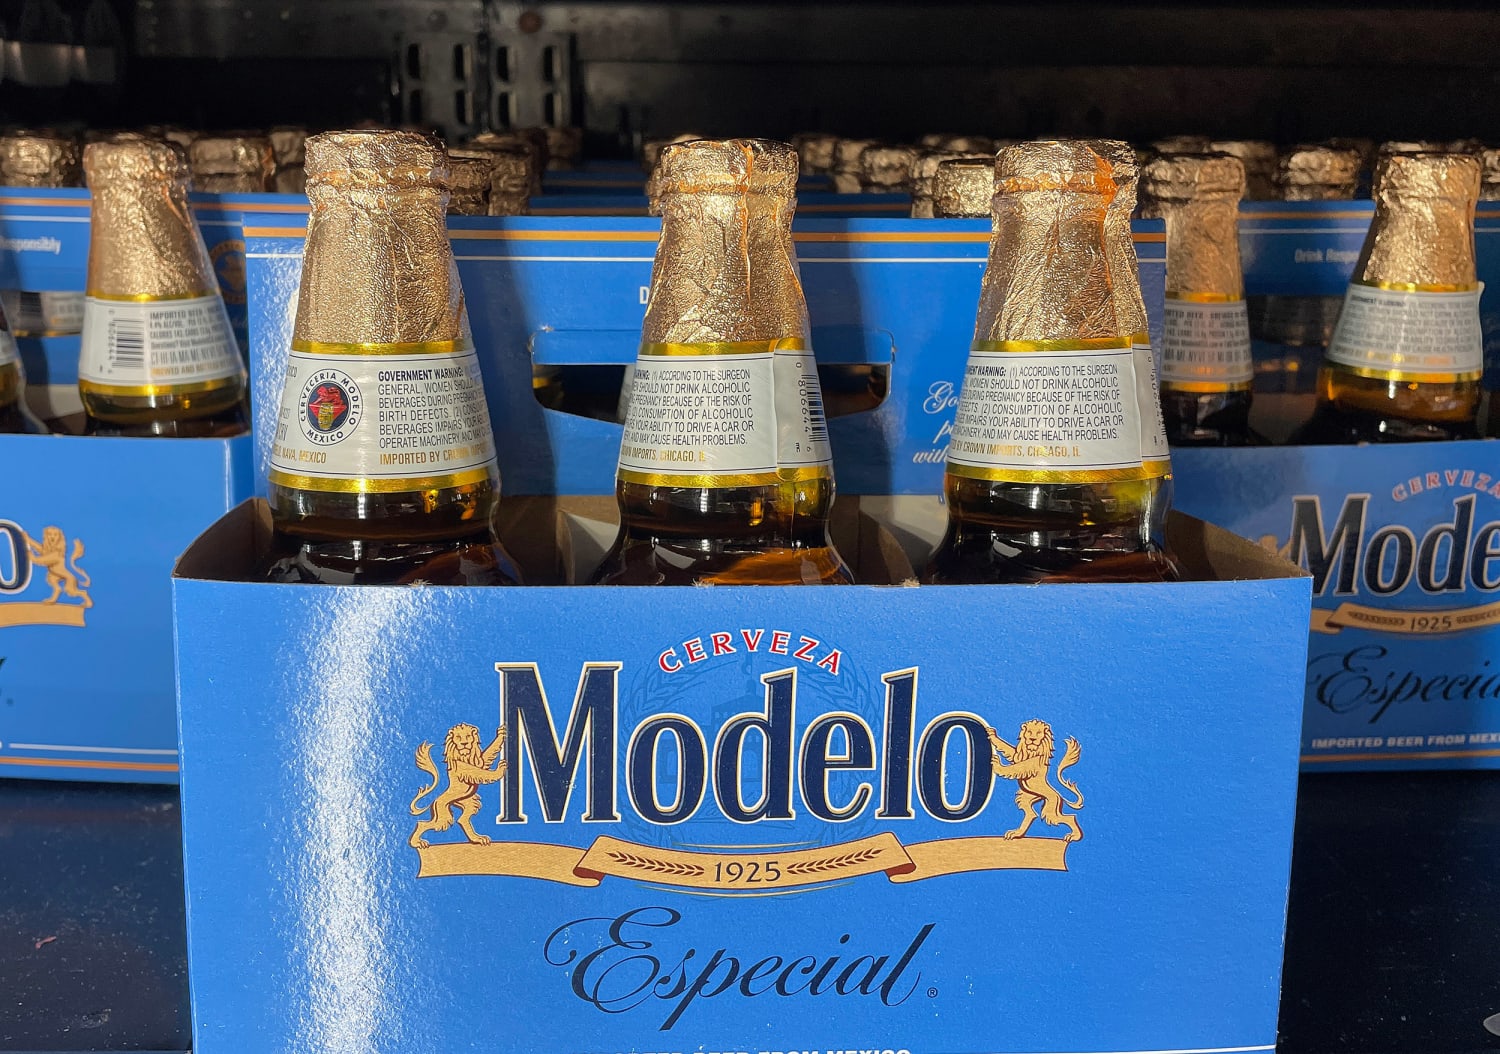 Modelo tops as the top-selling beer in the U.S. in May